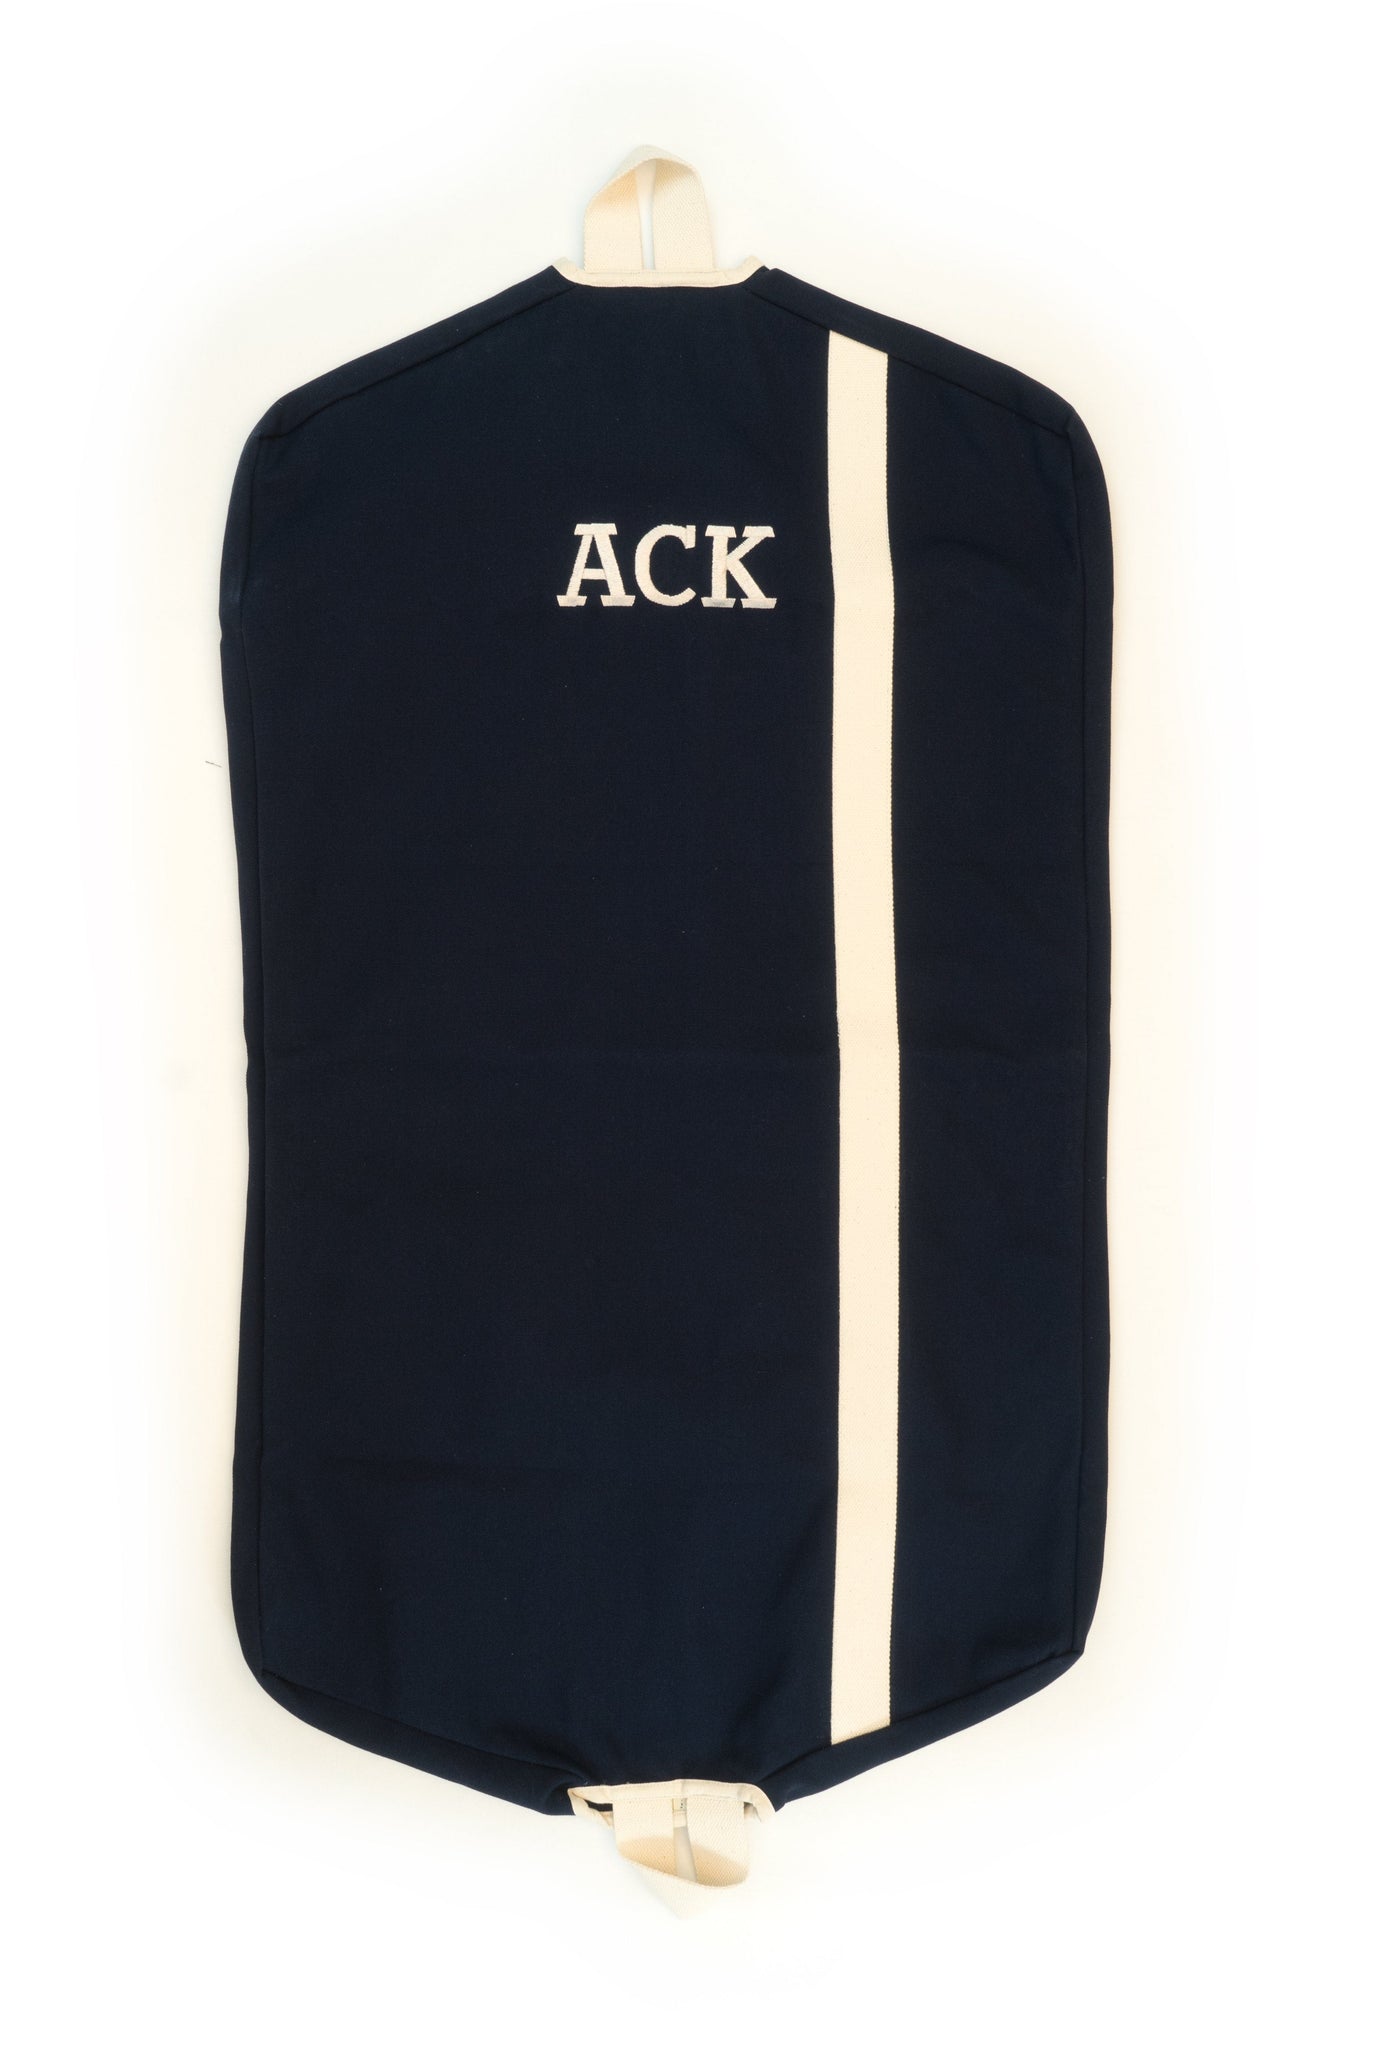 Garment Bag Personalized With A Monogram - ACCESSORIES NO GOOG SHOP - Castaway Nantucket Island